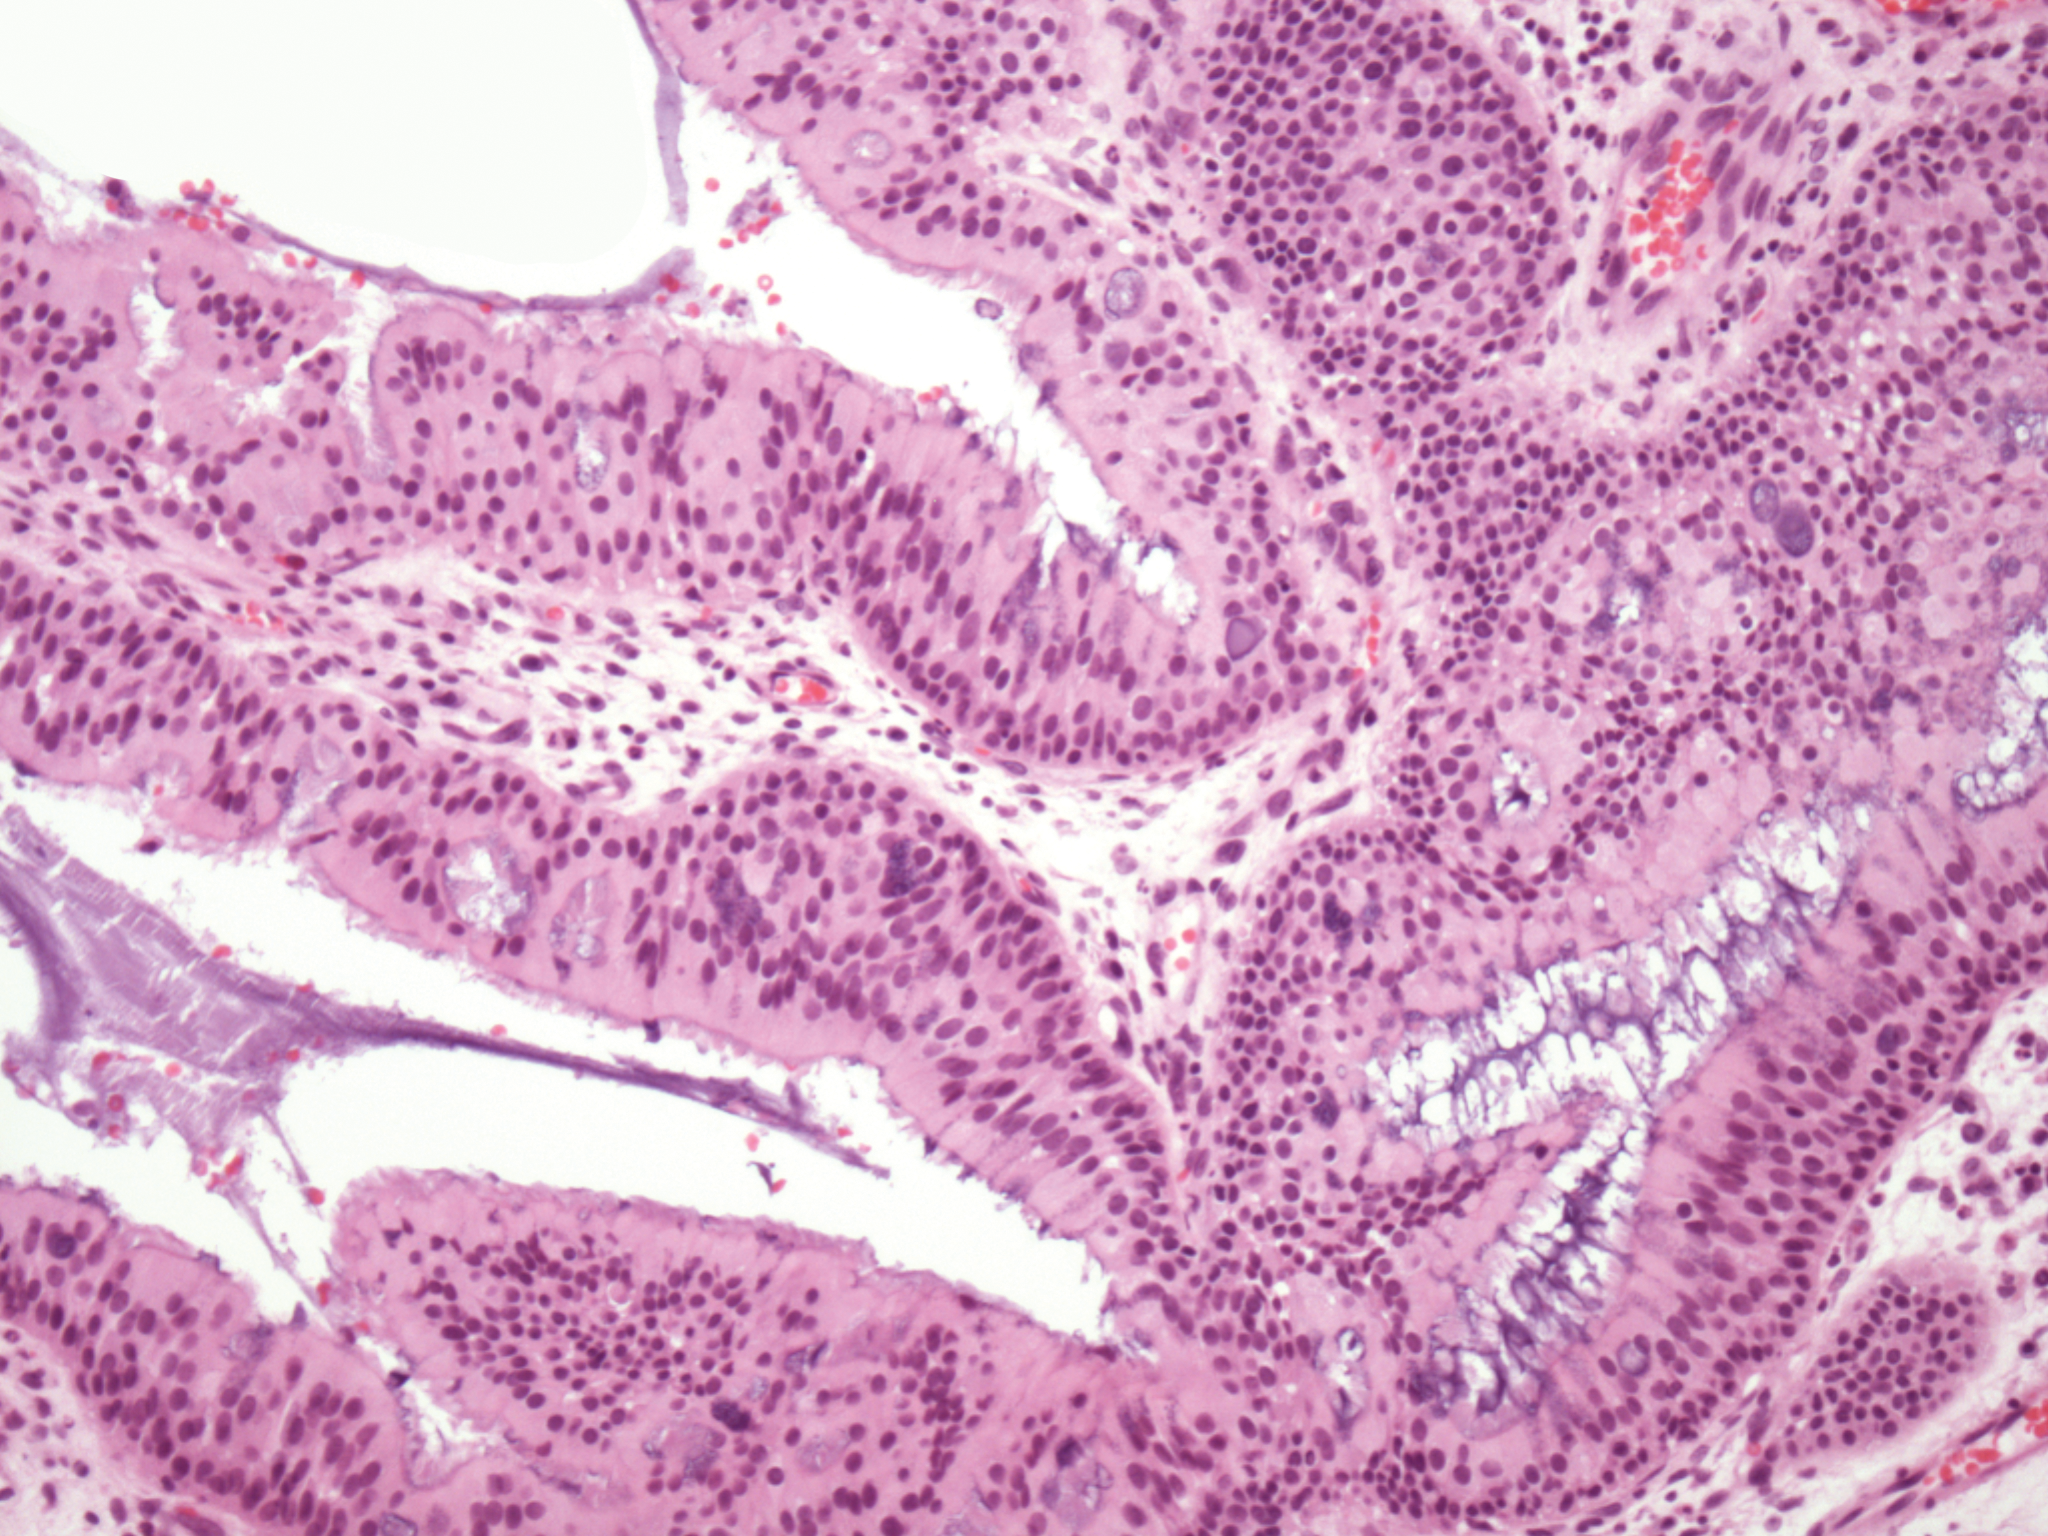 Inverted papilloma nasopharynx